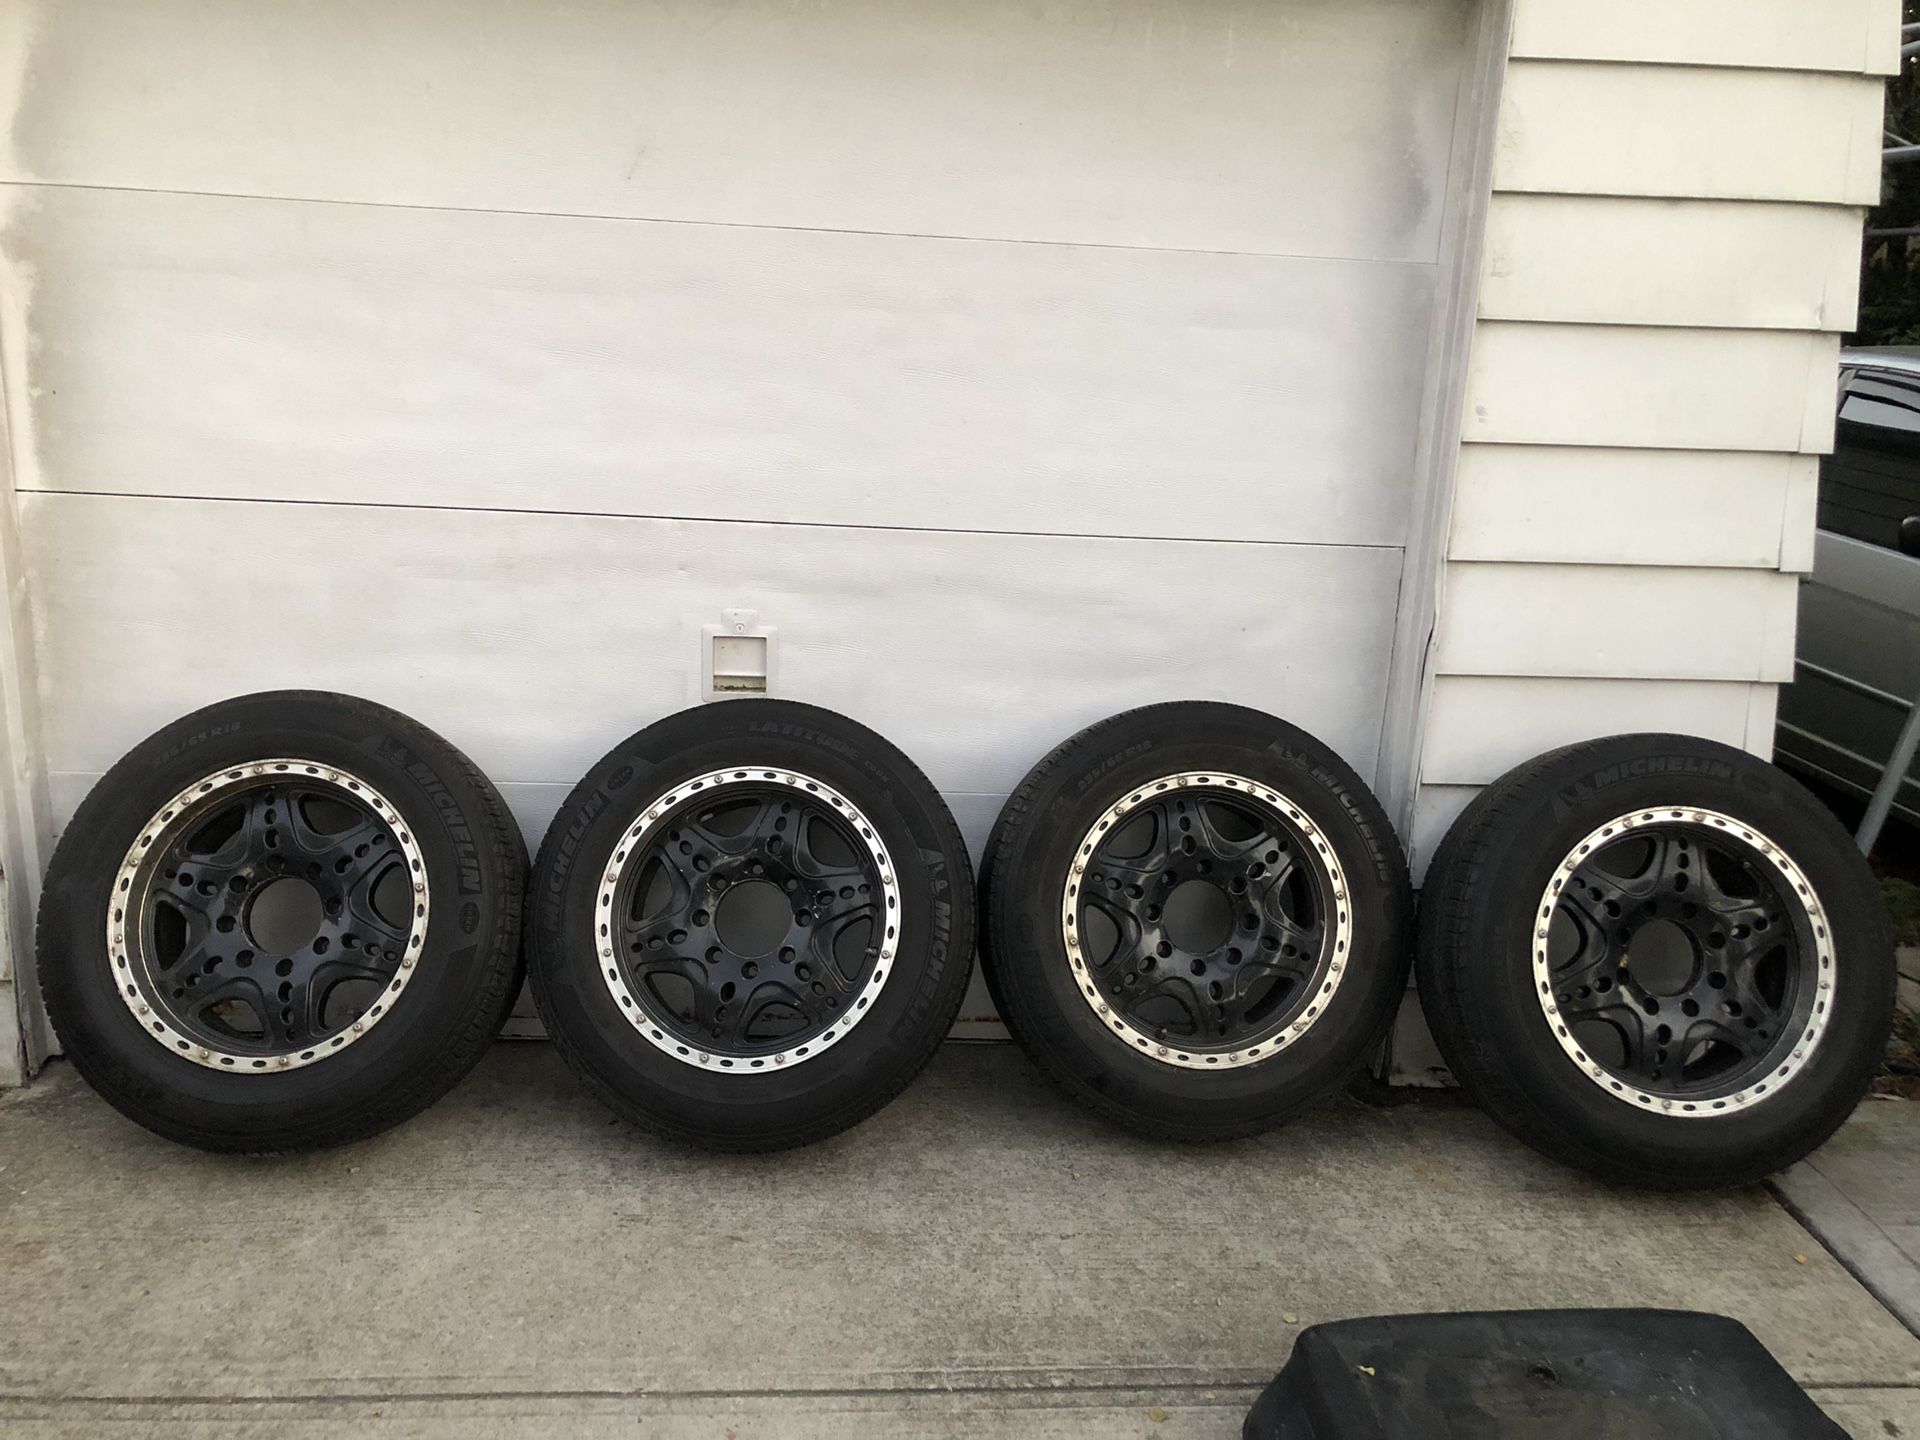 8 lug rims with tire